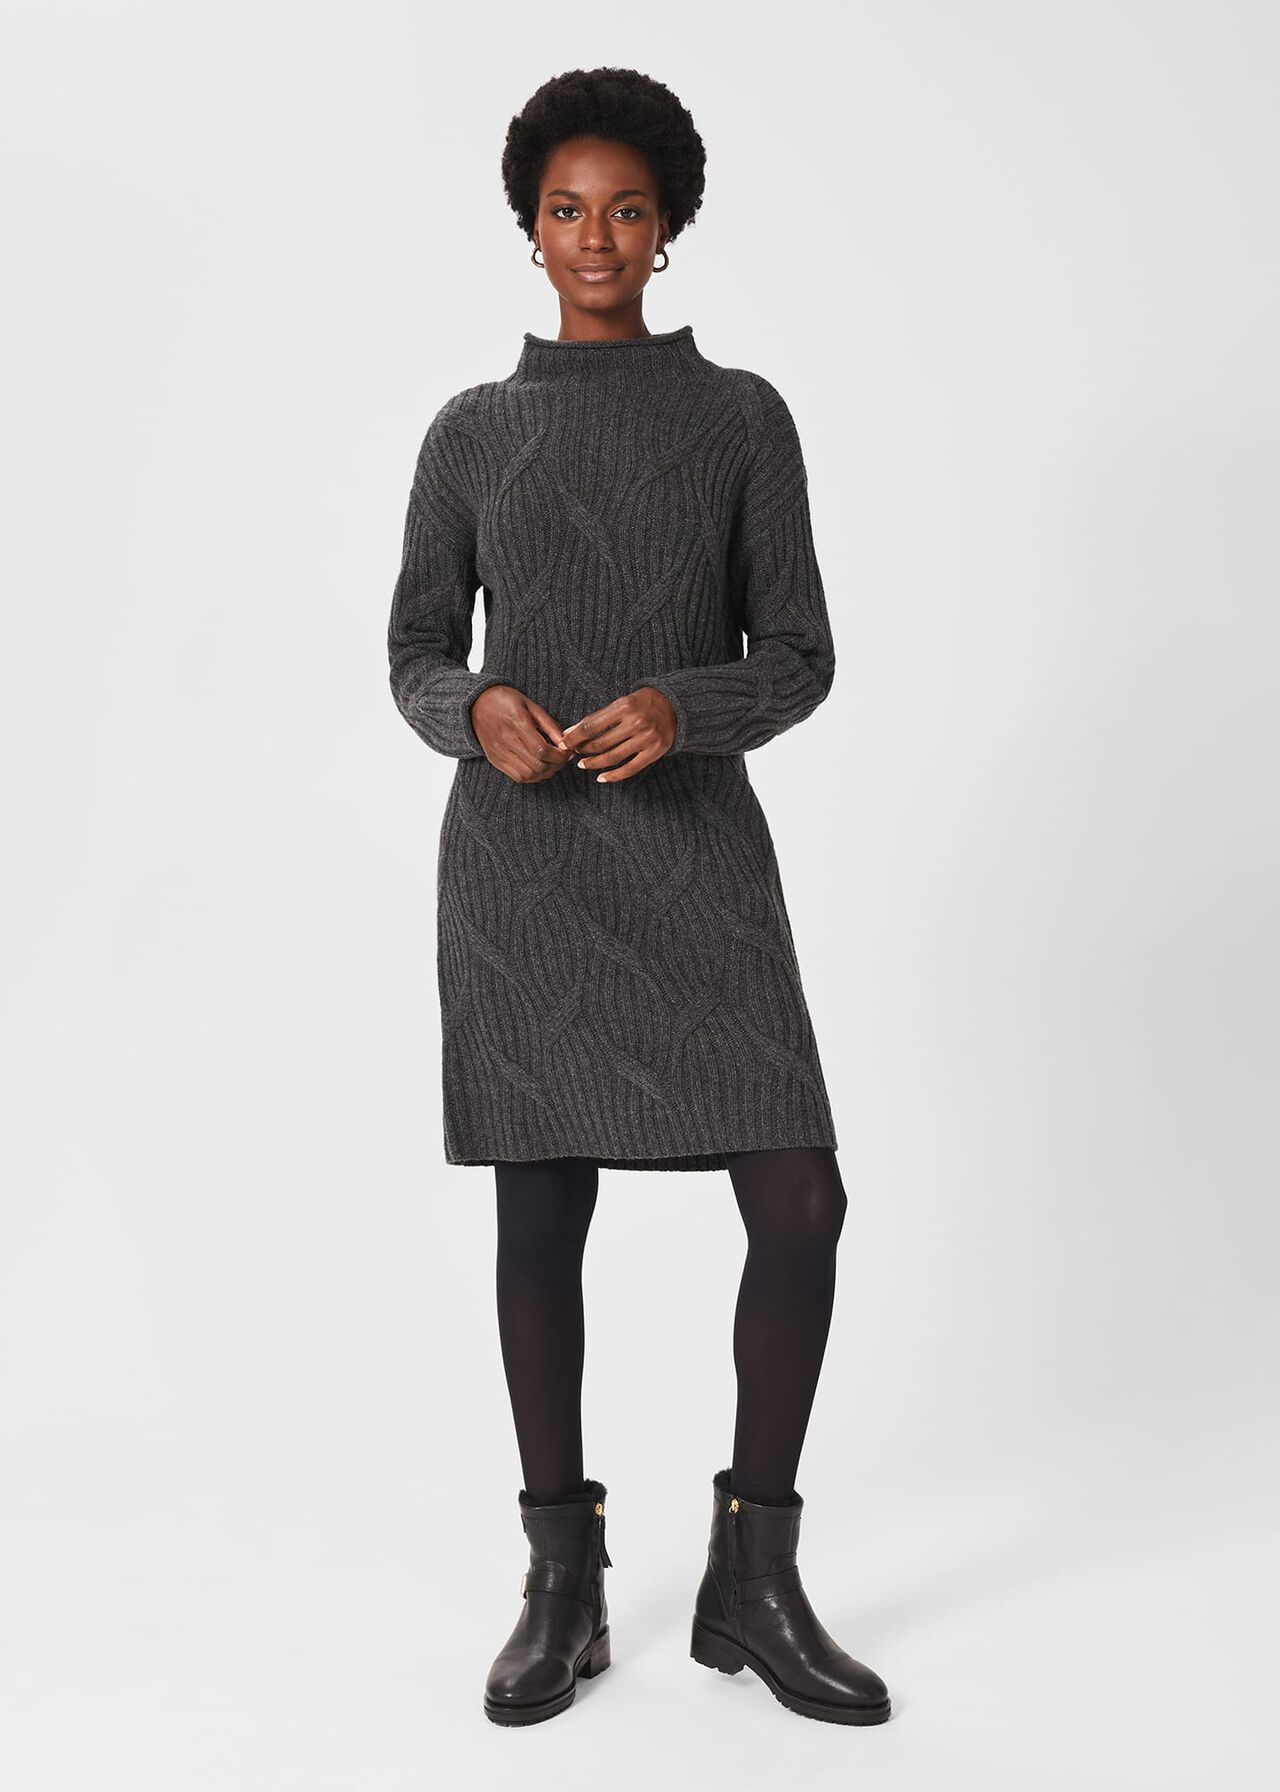 Malikah Knitted Dress, Charcoal Grey, hi-res